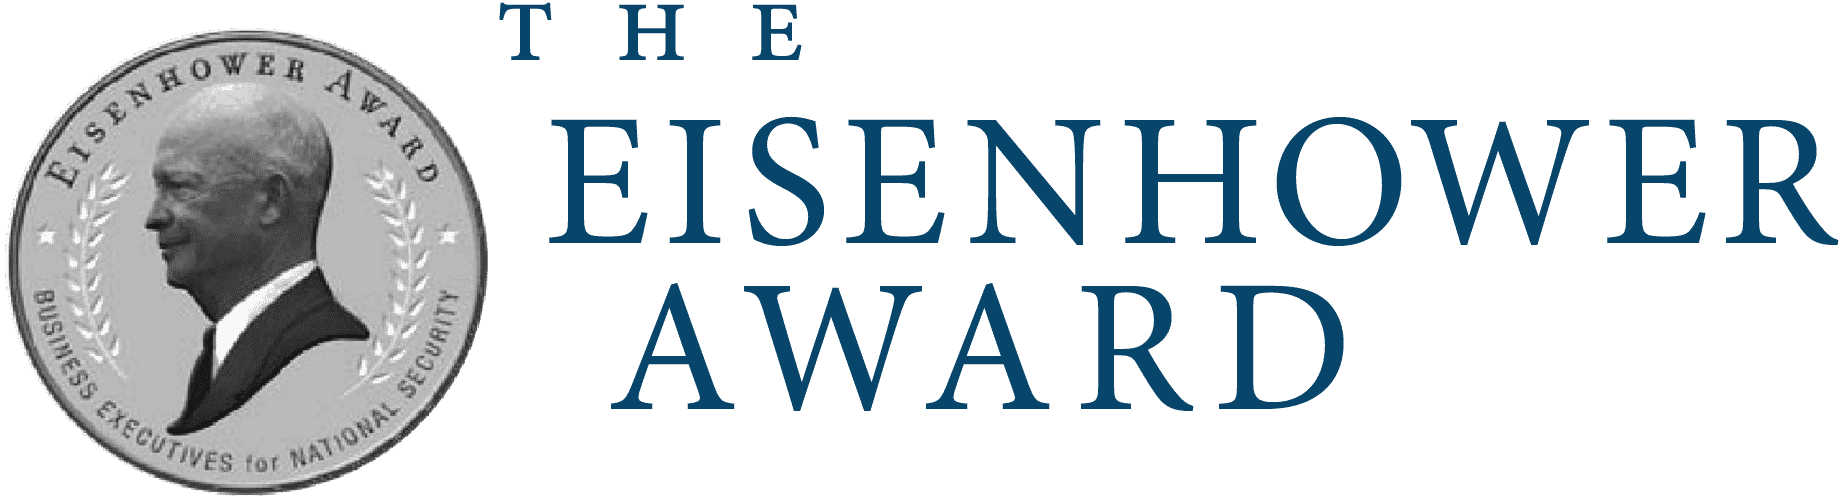 Eisenhower Gala The Award